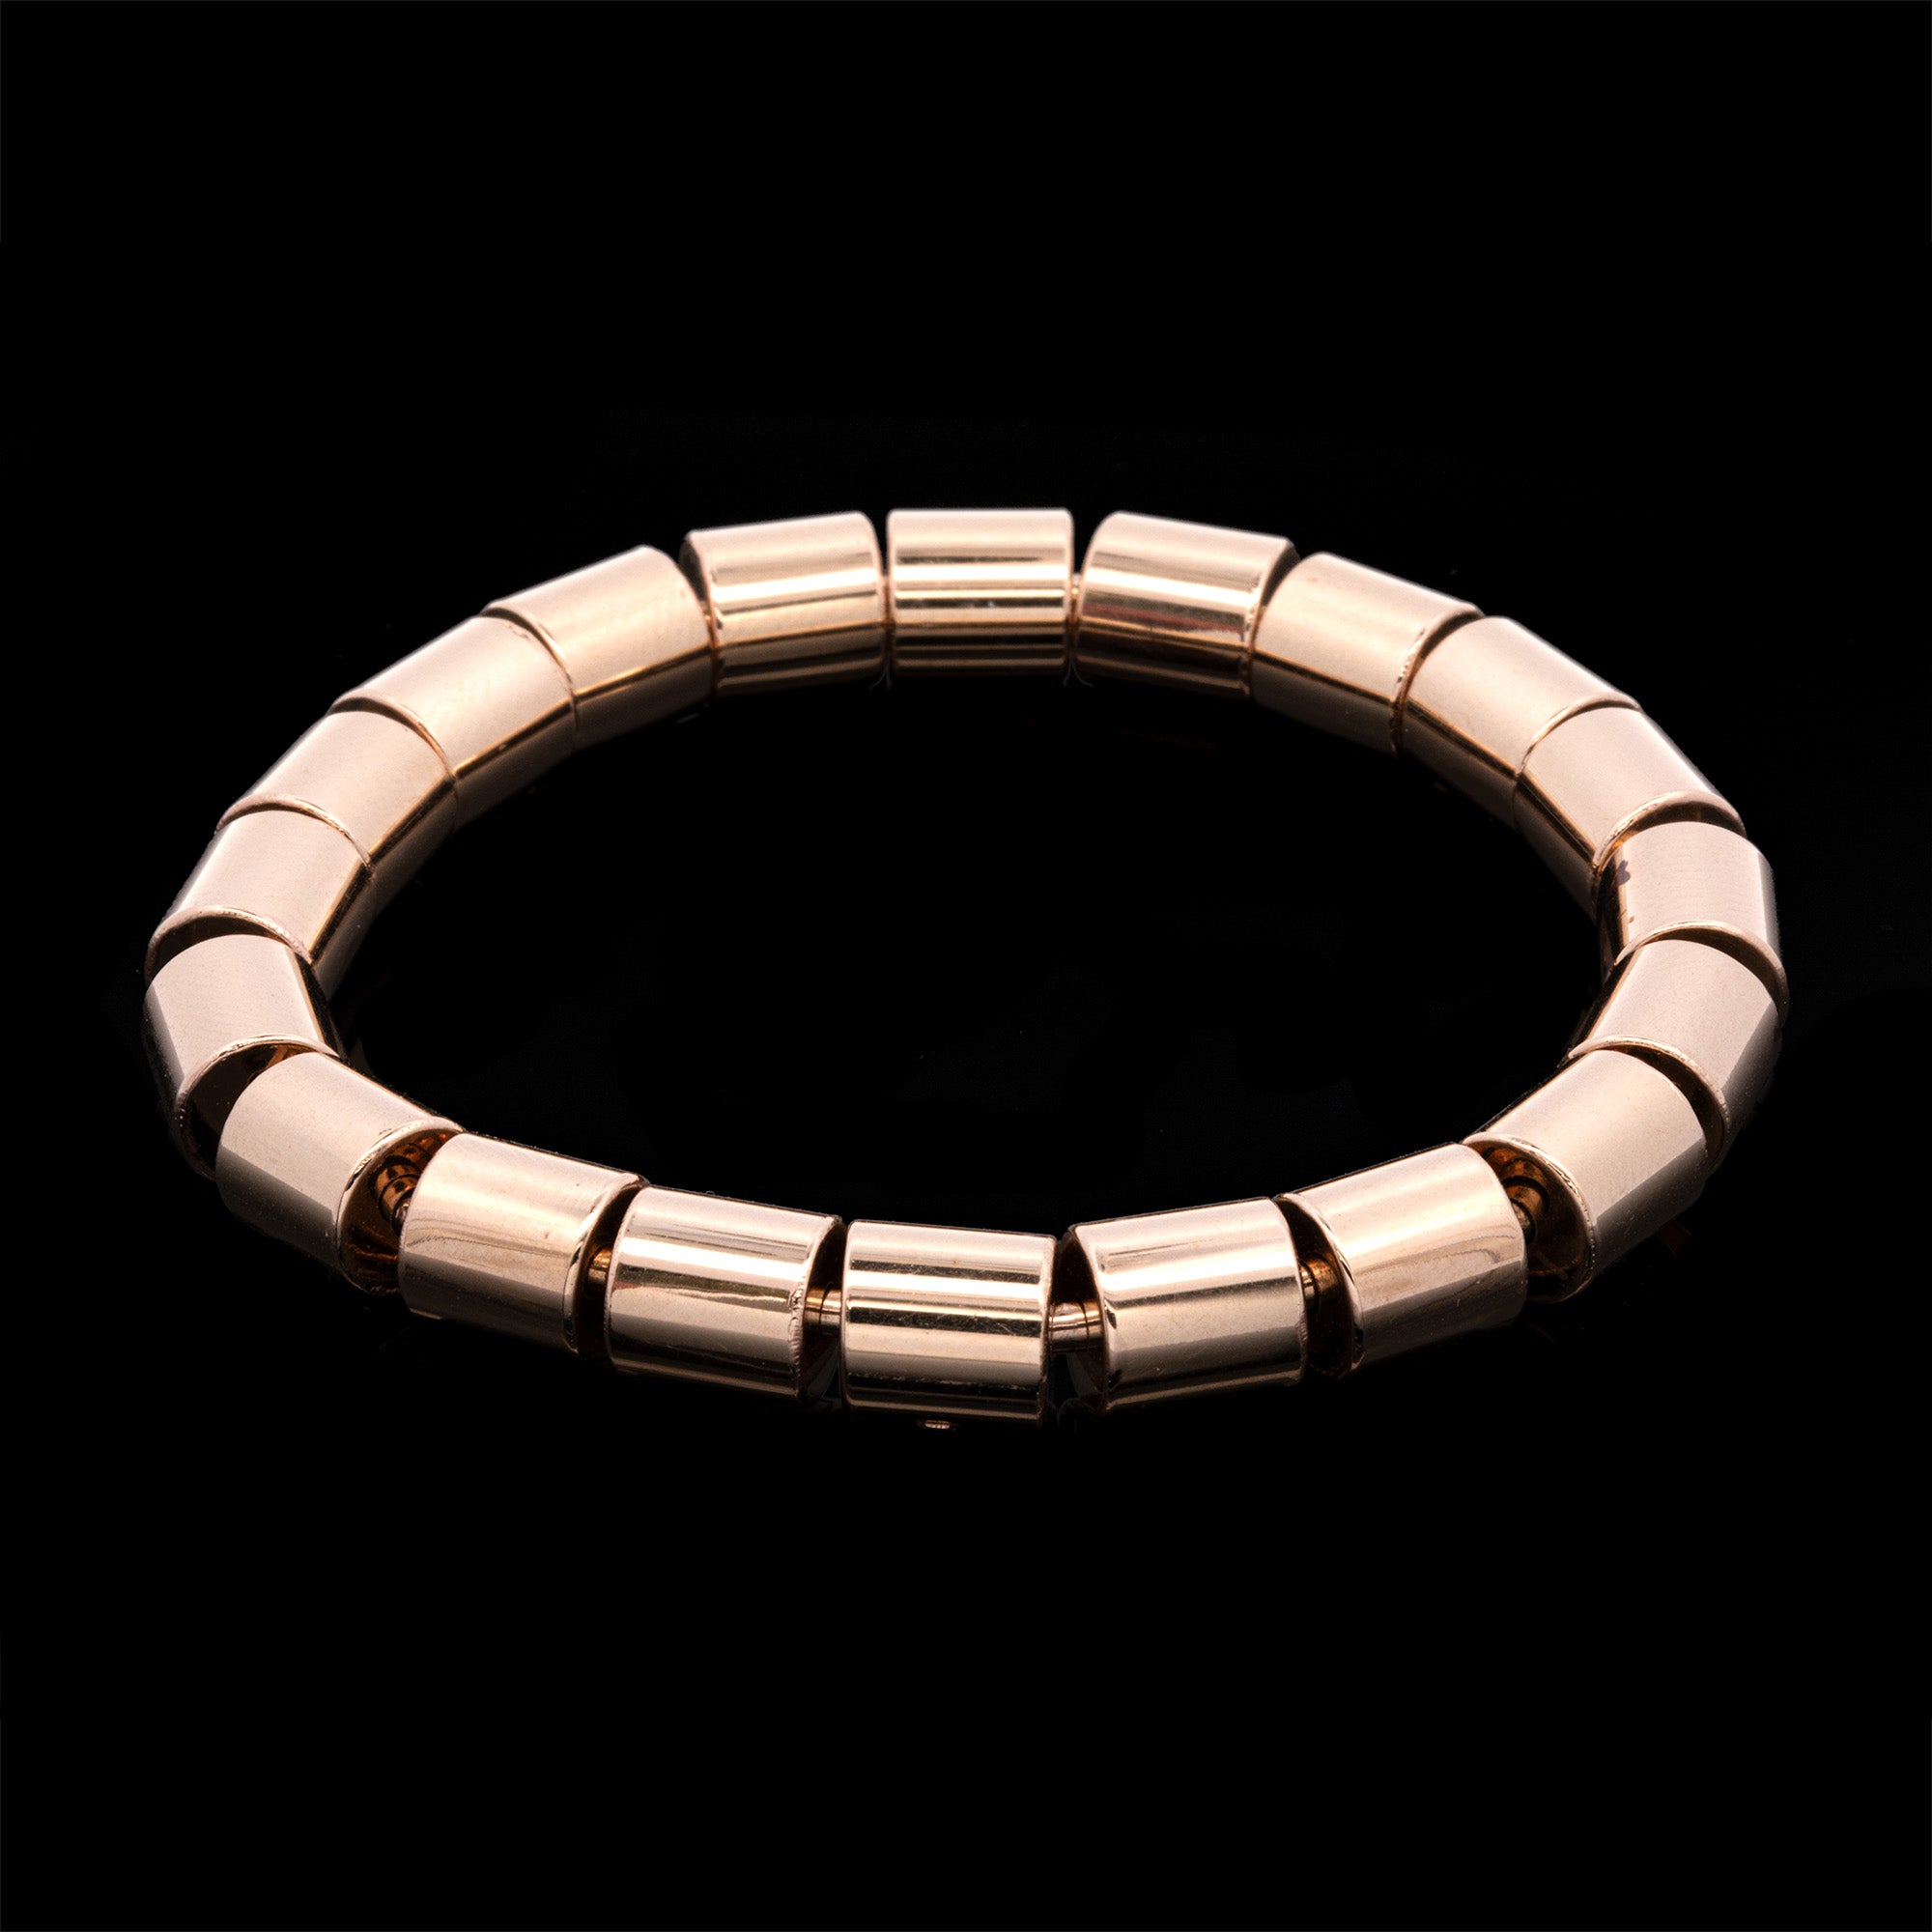 Men's Leather Bracelet with Stainless Steel Rose Gold Colour Details -  MEN'S VECTOR